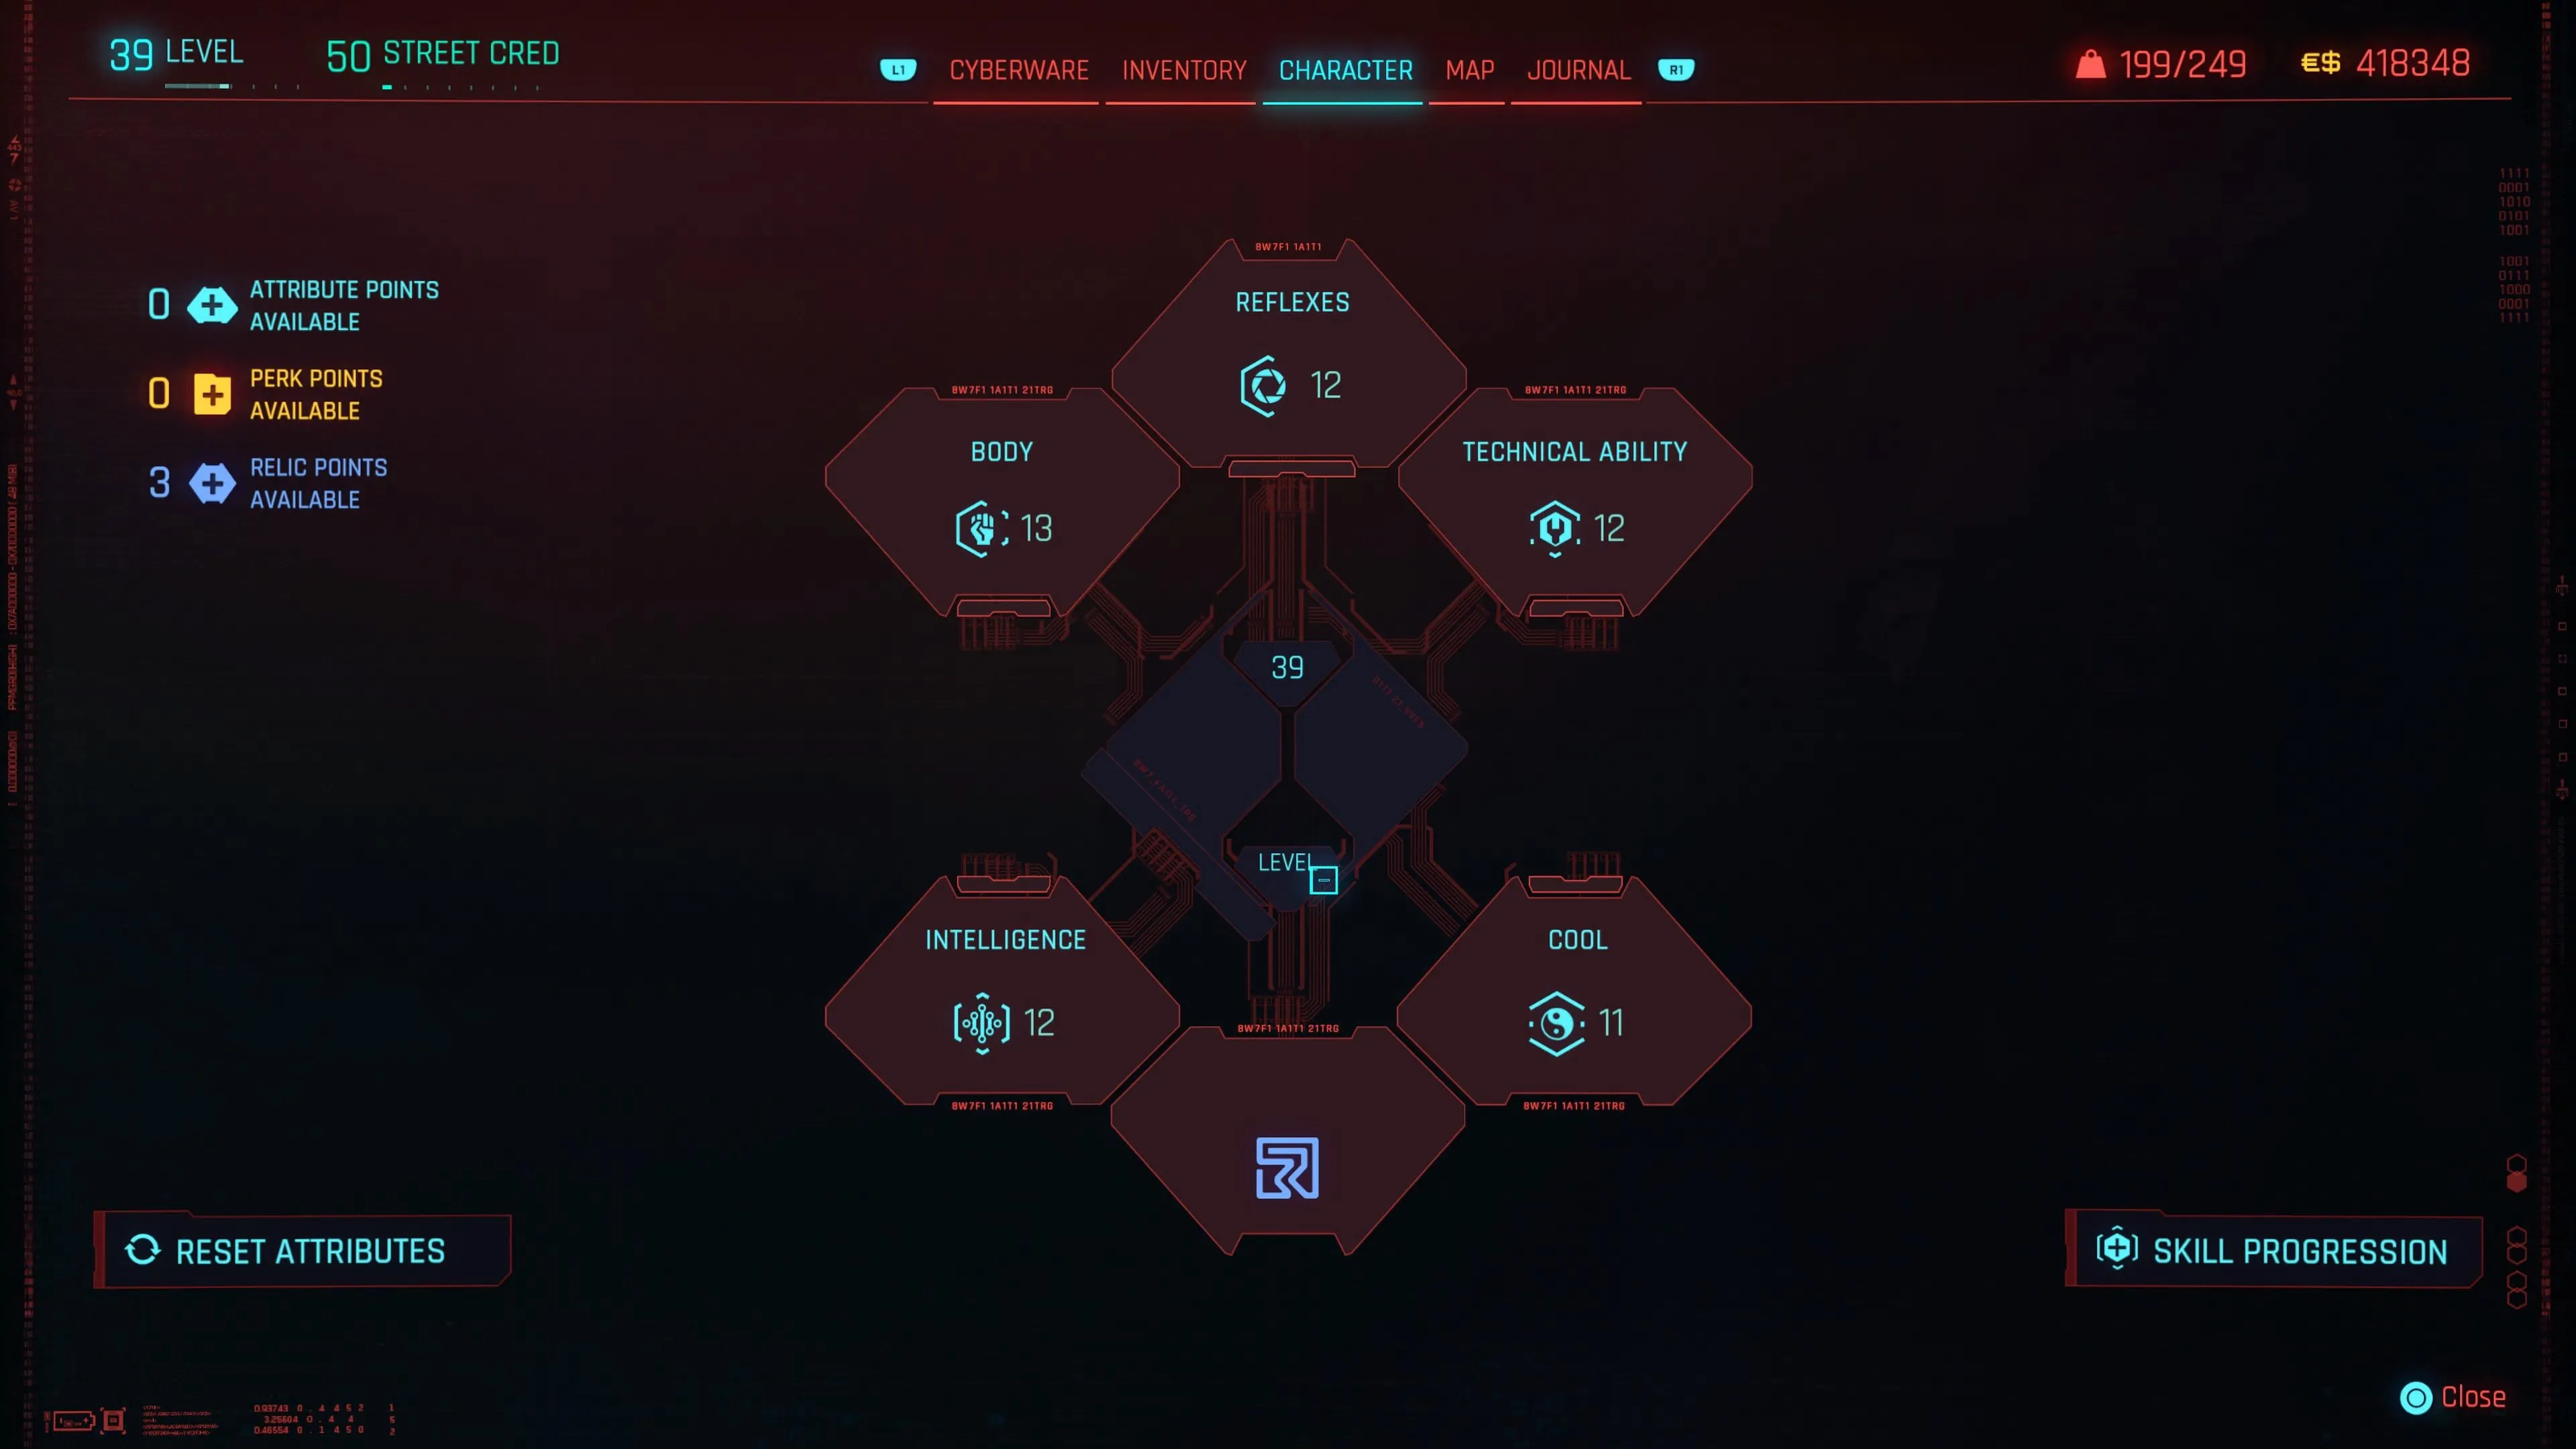 An in game screenshot of the character skills menu from Cyberpunk 2077.